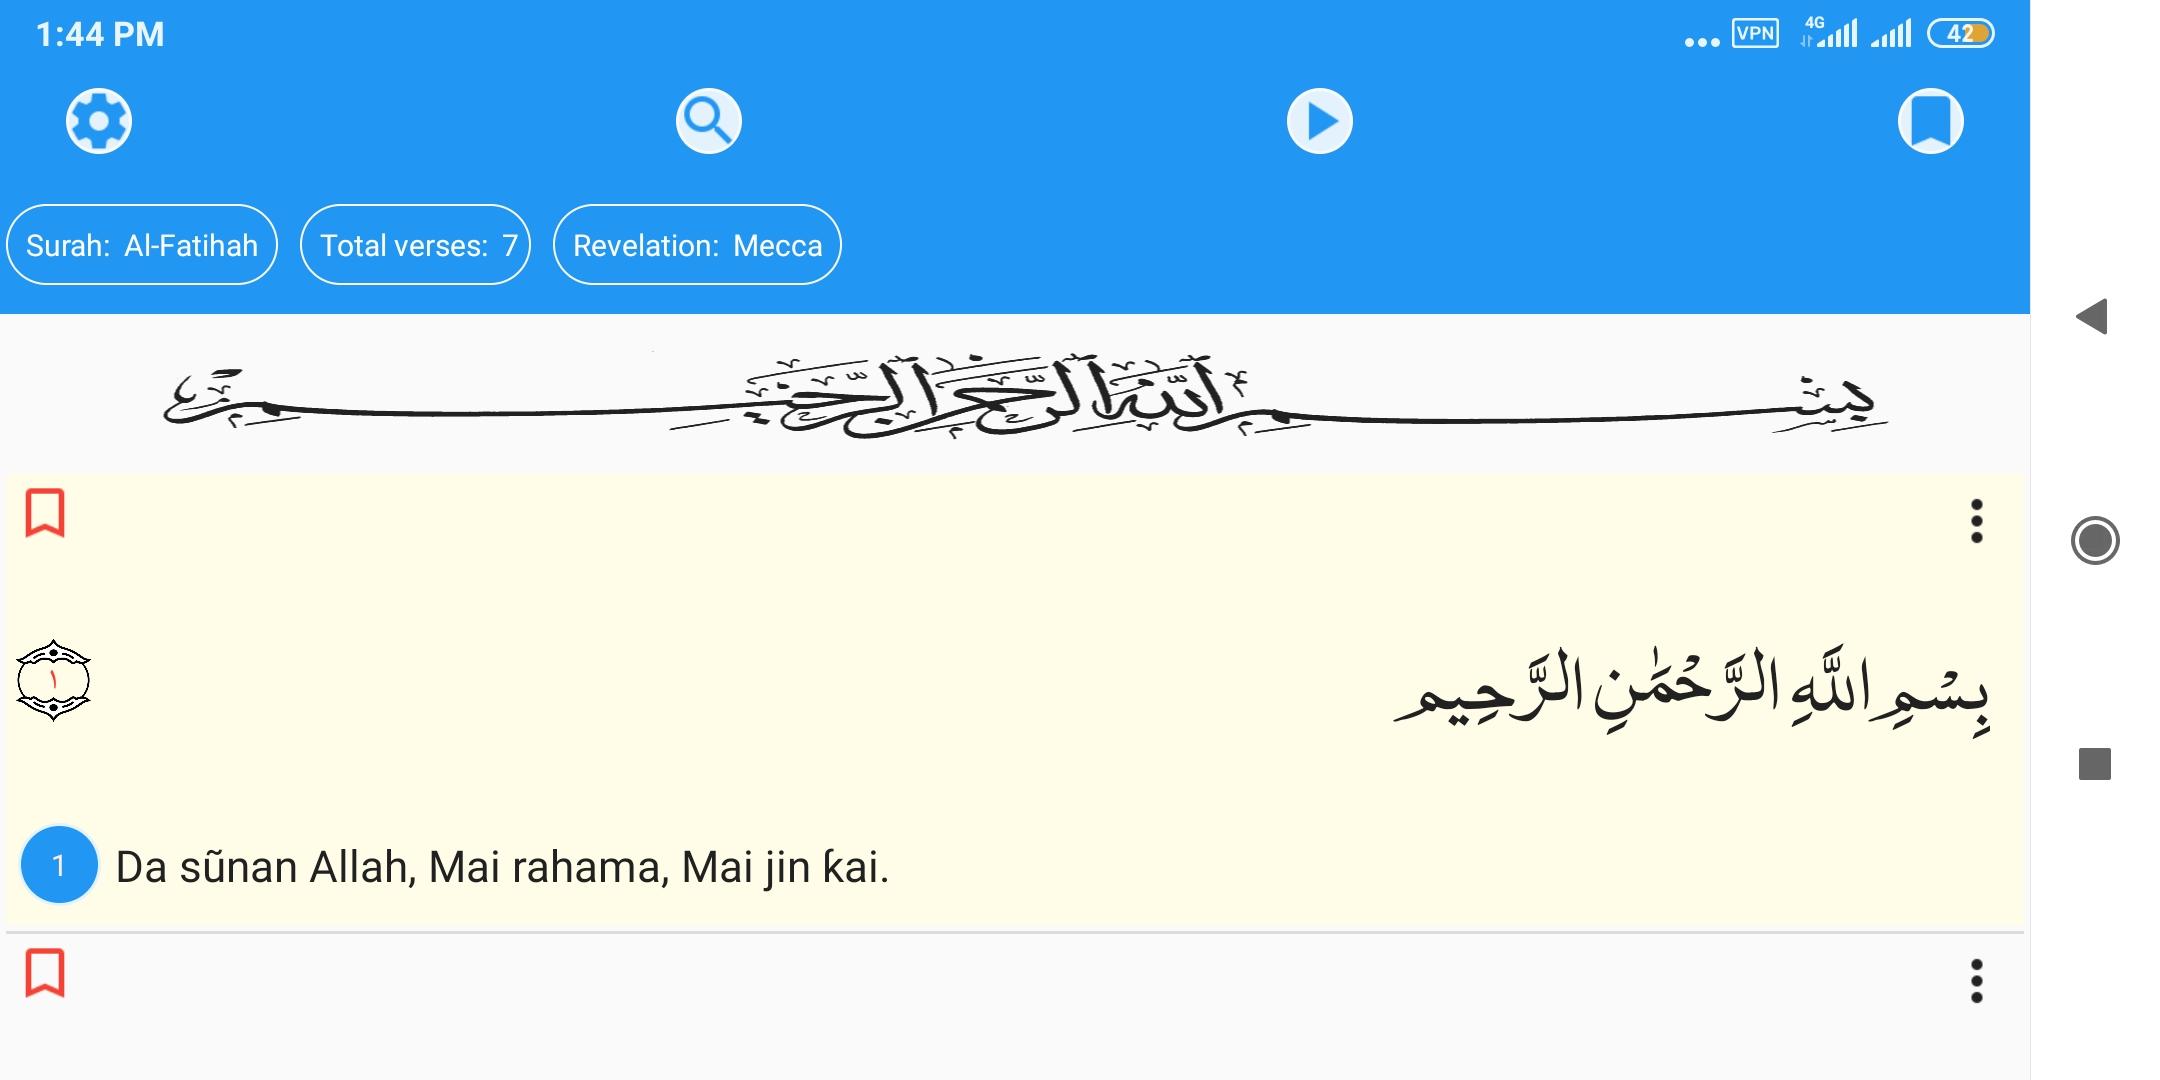 Hausa Qur'an - Qur'an with Hausa Translation 1.1 Screenshot 10